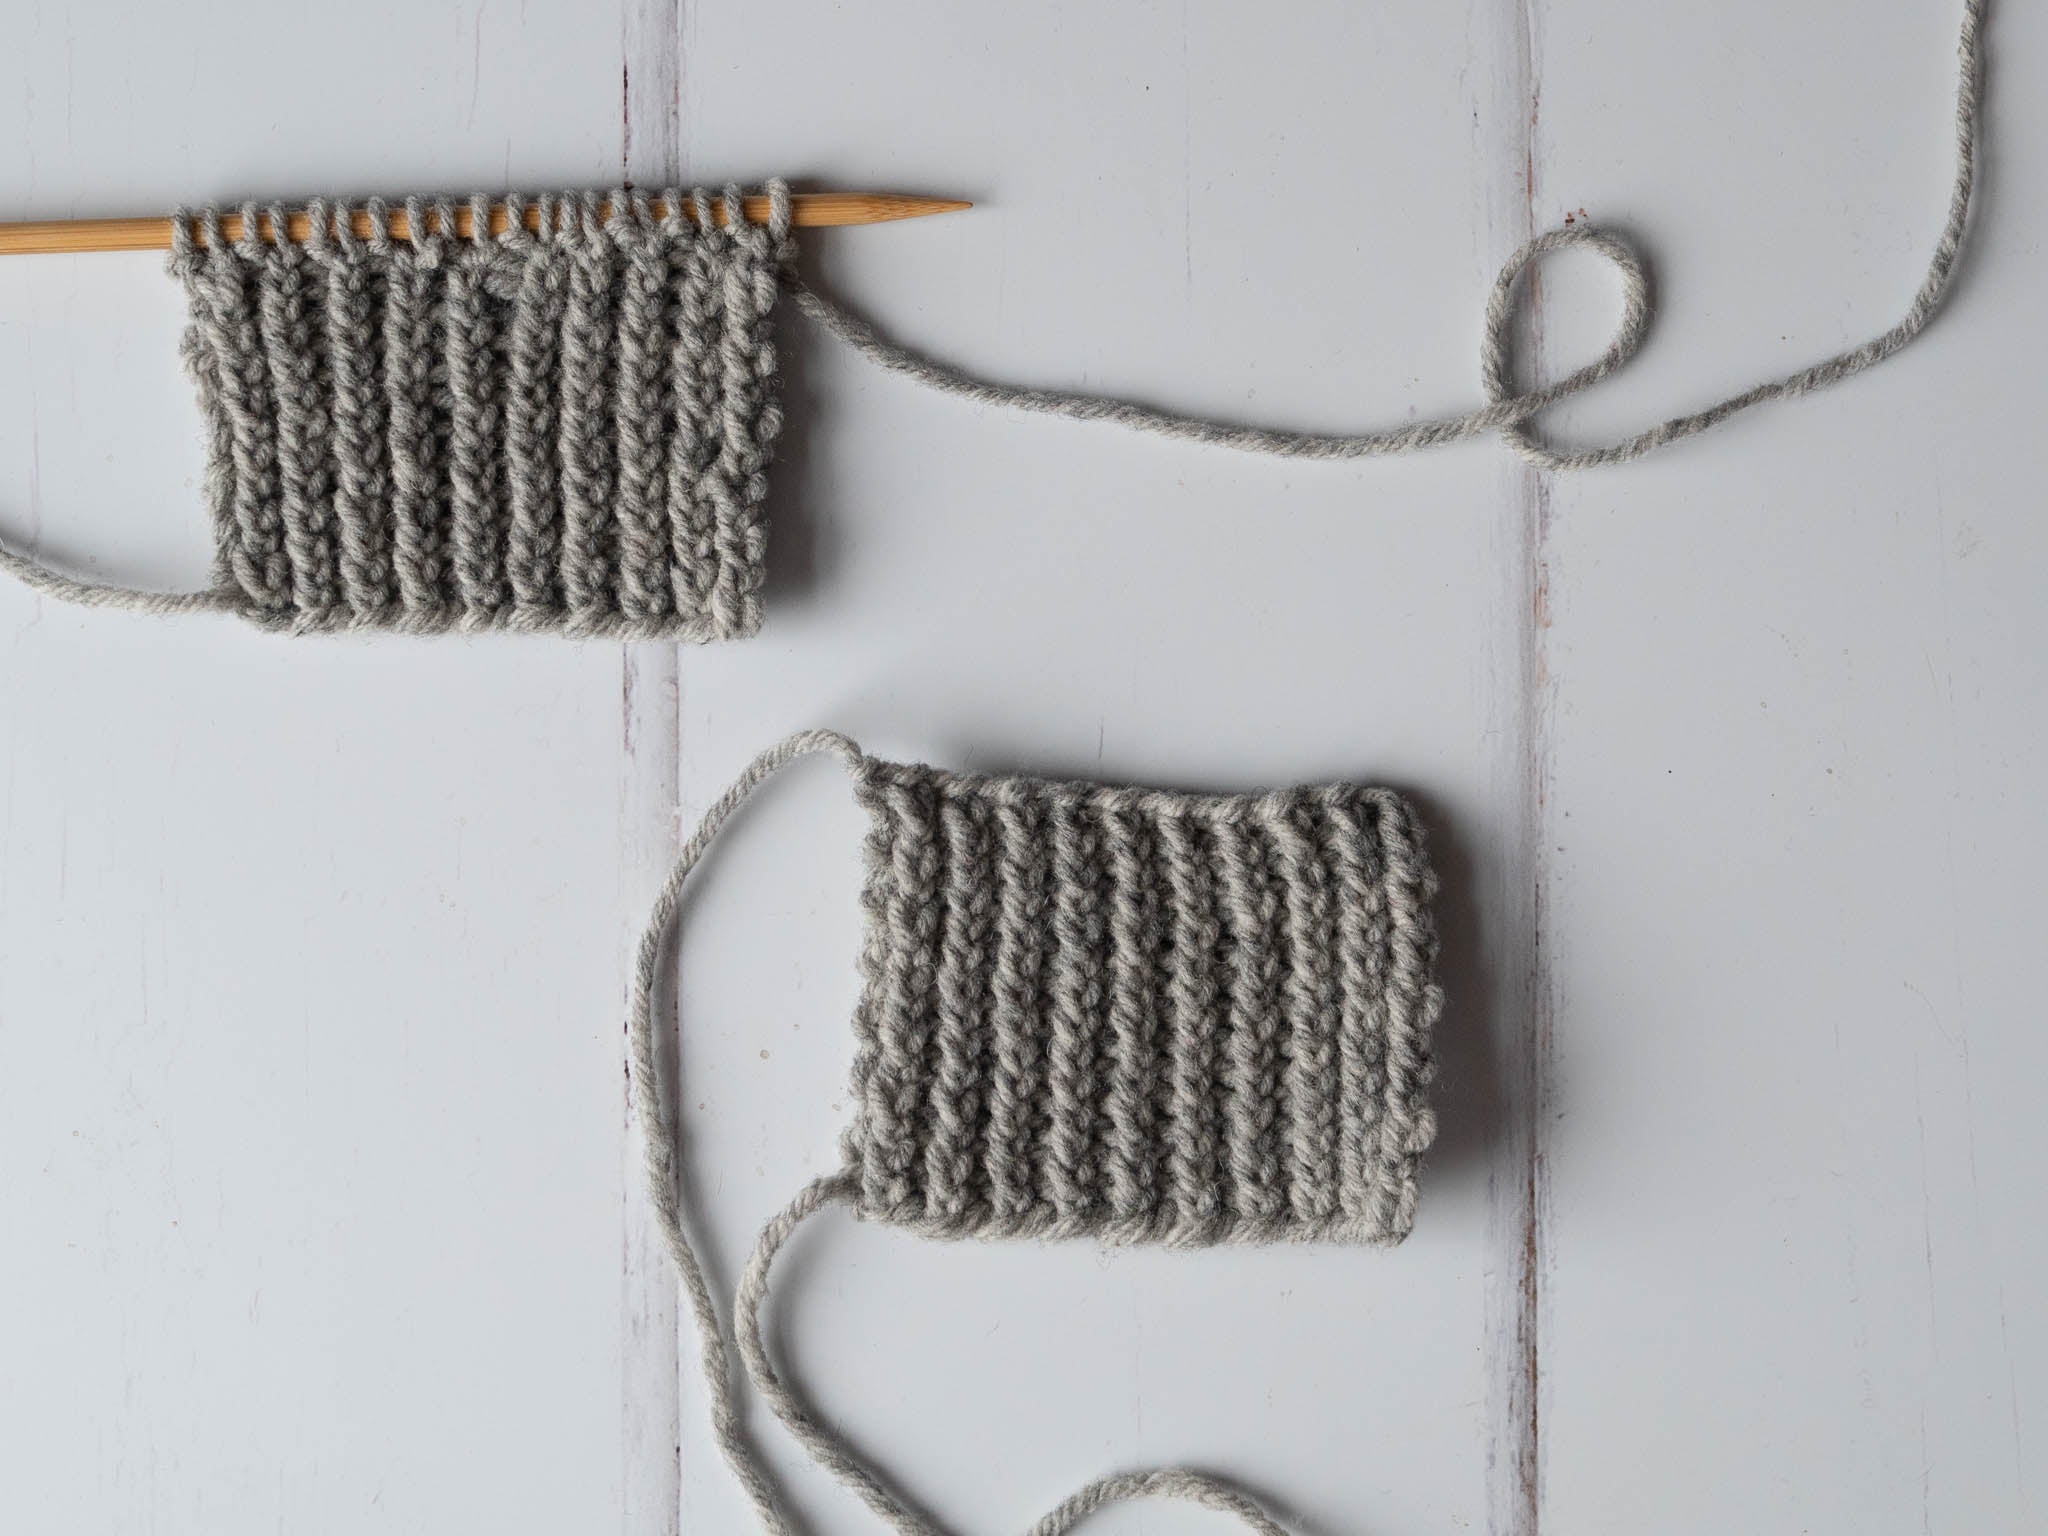 How to Knit the Double Twisted 1x1 Rib Stitch, Knitting Stitch Pattern